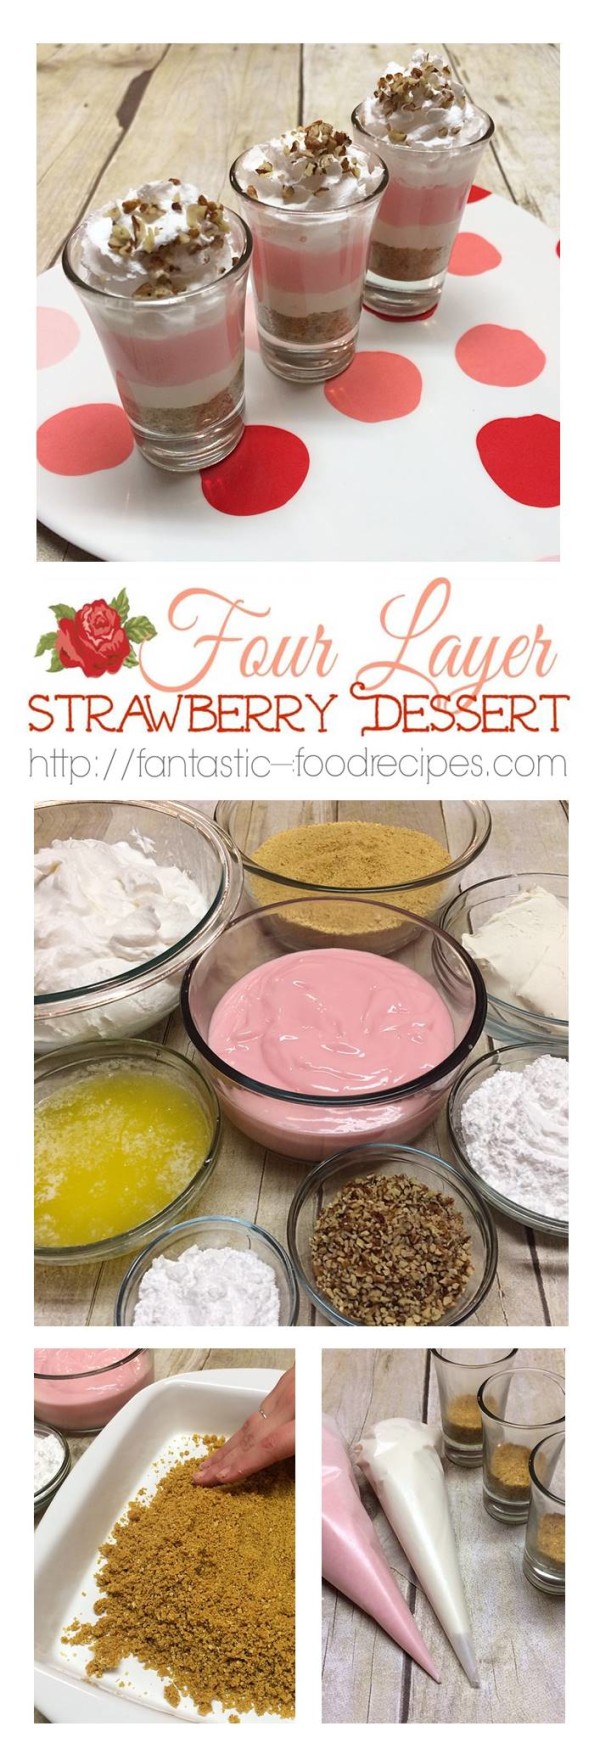 Four Layer Strawberry Dessert